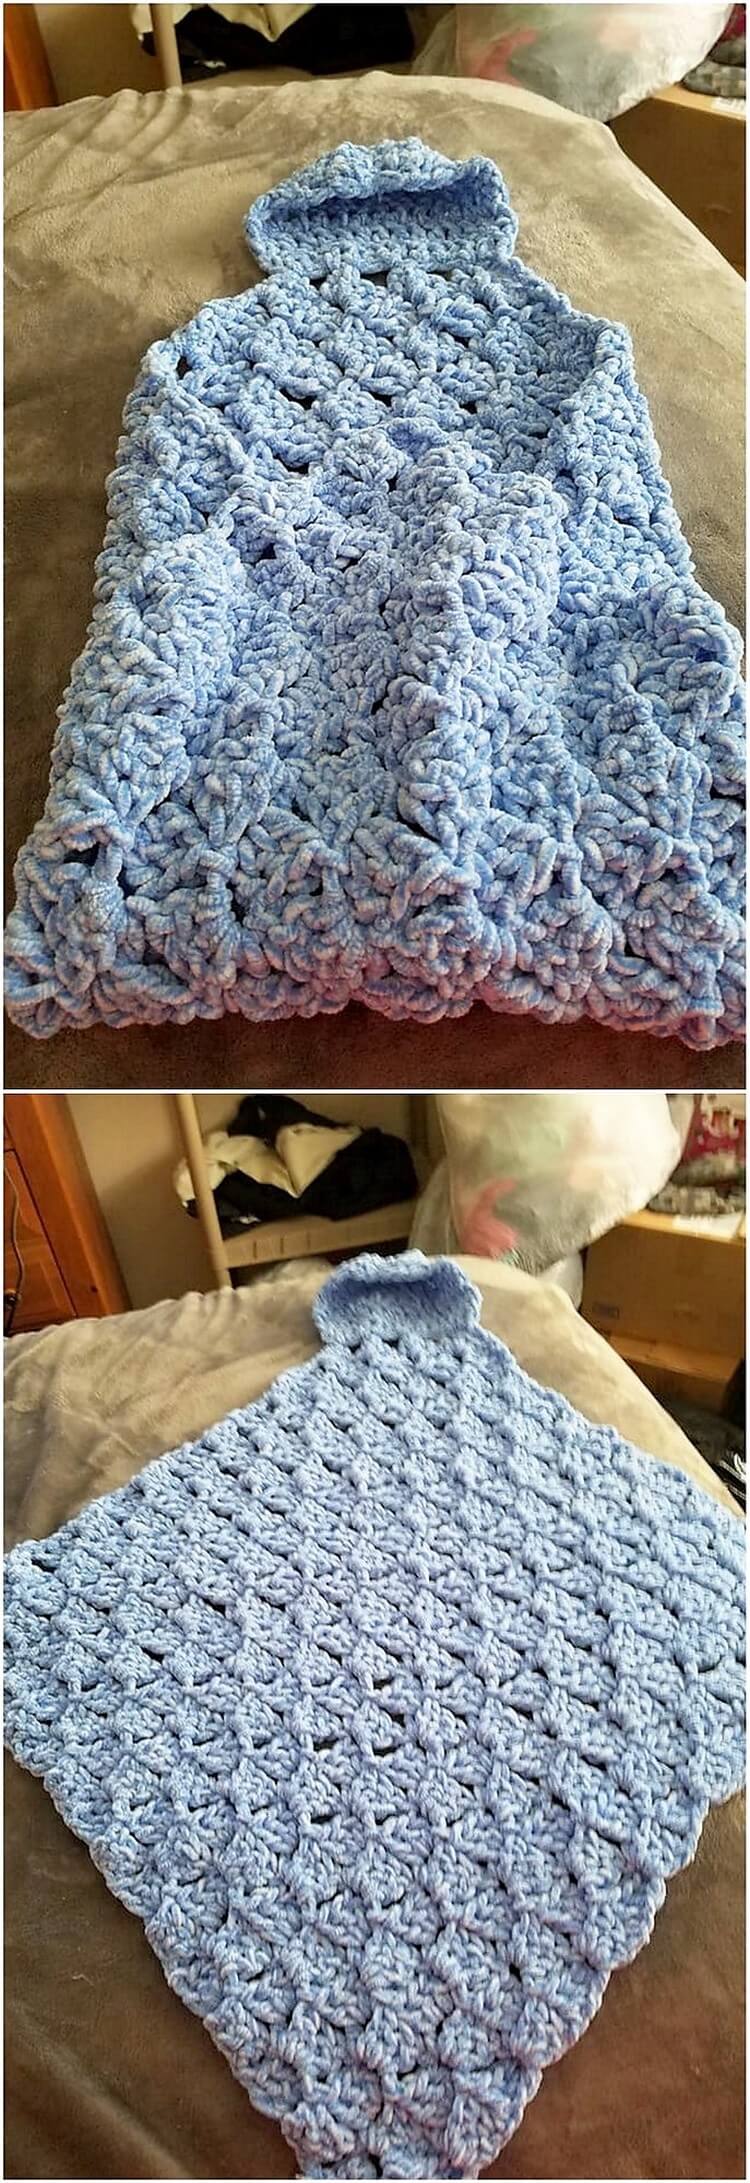 Crochet Creation Idea